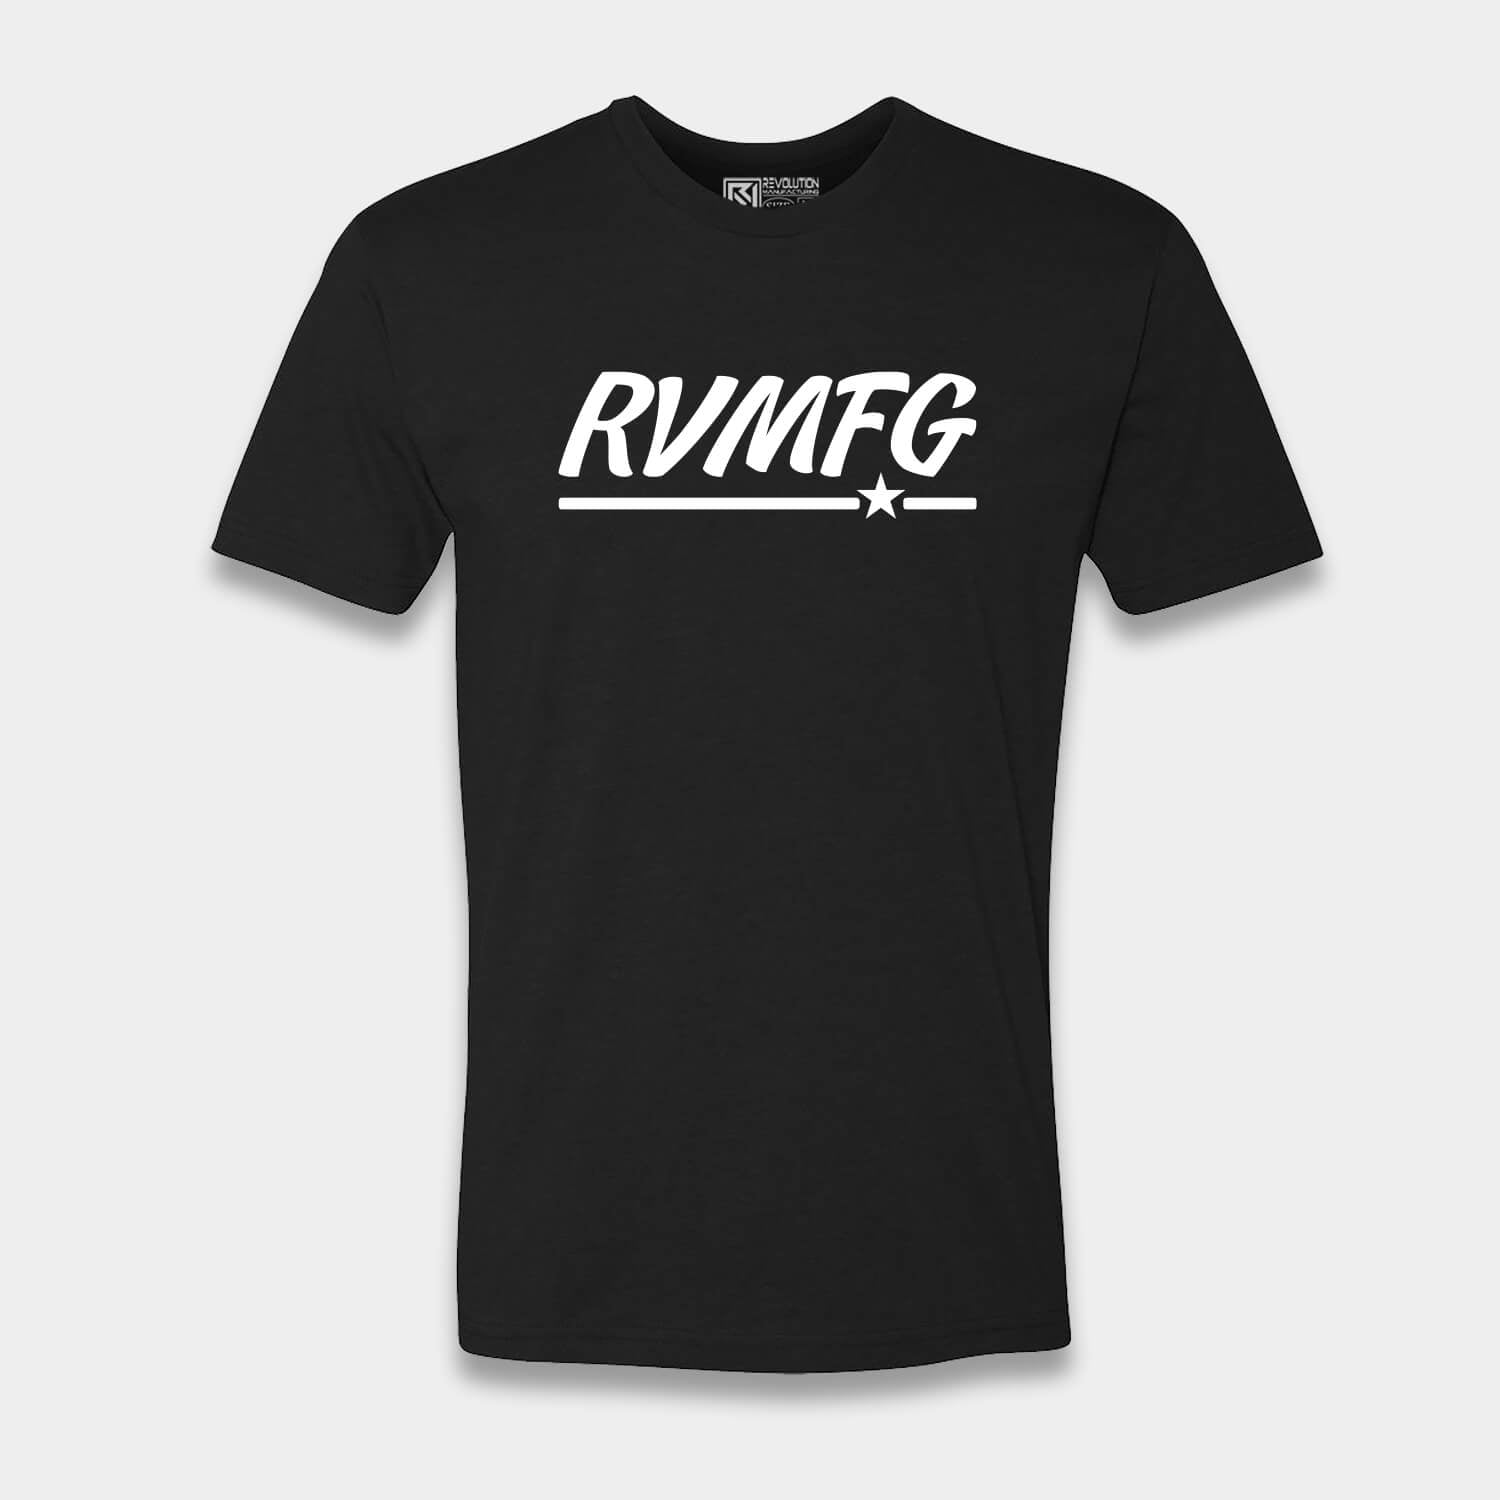 RVMFG Signature T-Shirt